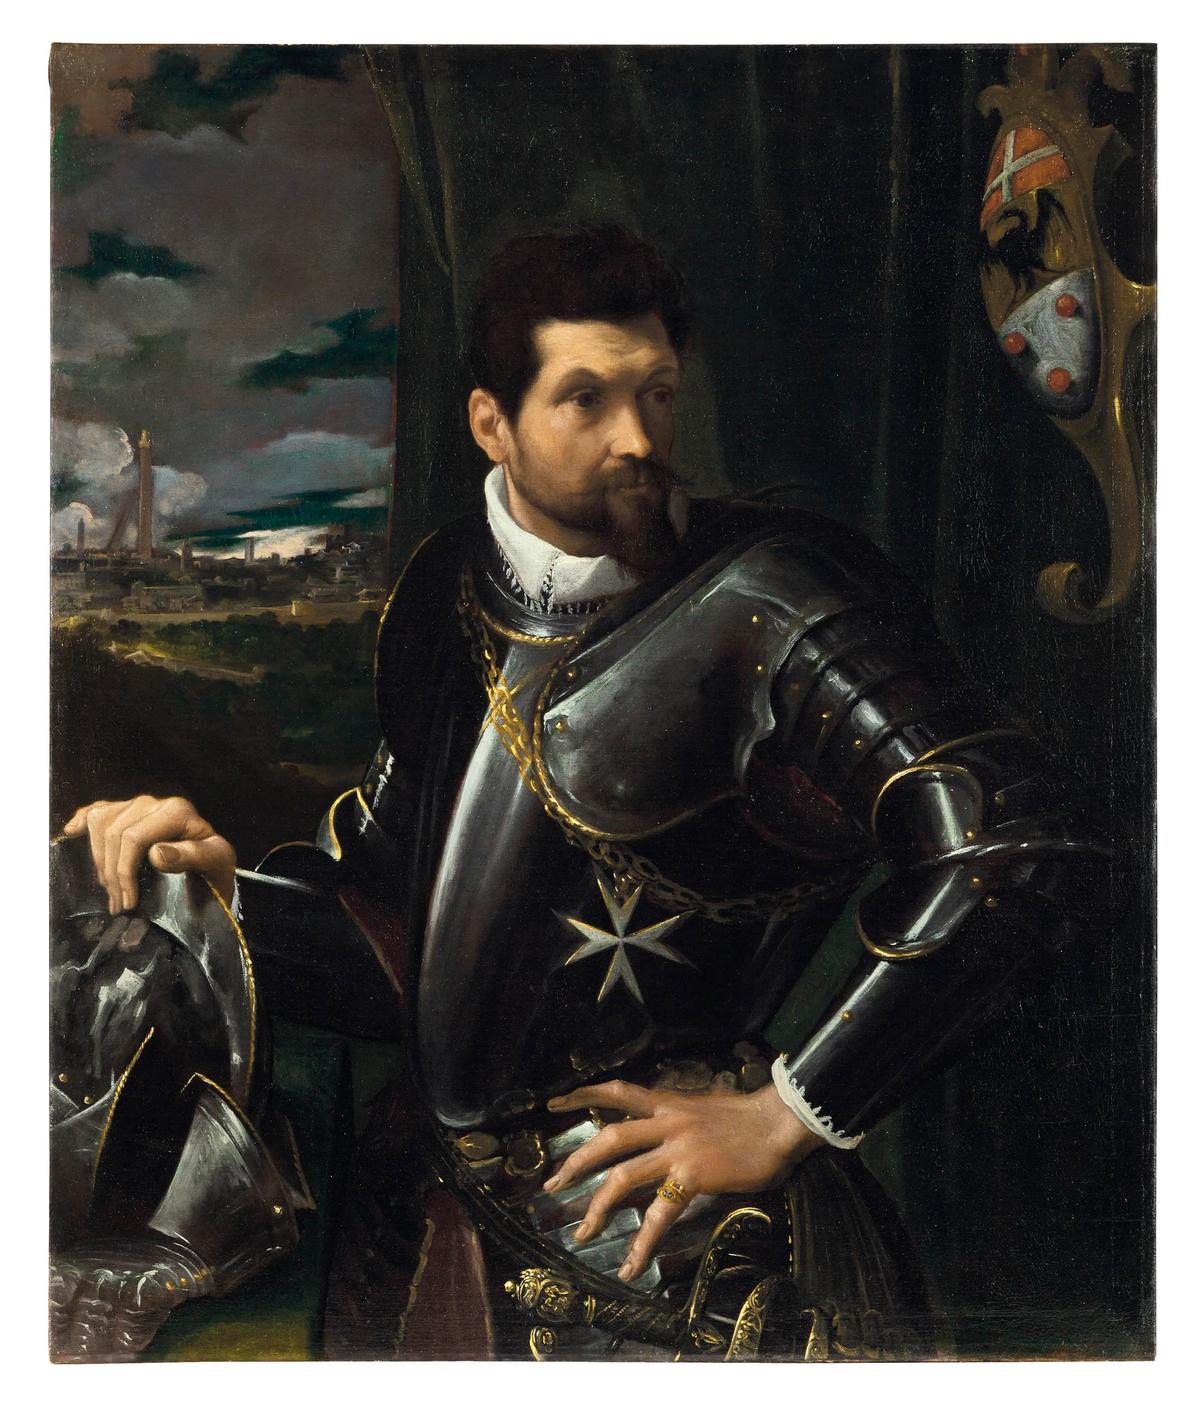 Ludovico Carracci's Portrait of Carlo Alberto Rati Opizzoni in armour (around 1597-1600), sold for £4.3m (£5m with fees) Christie's